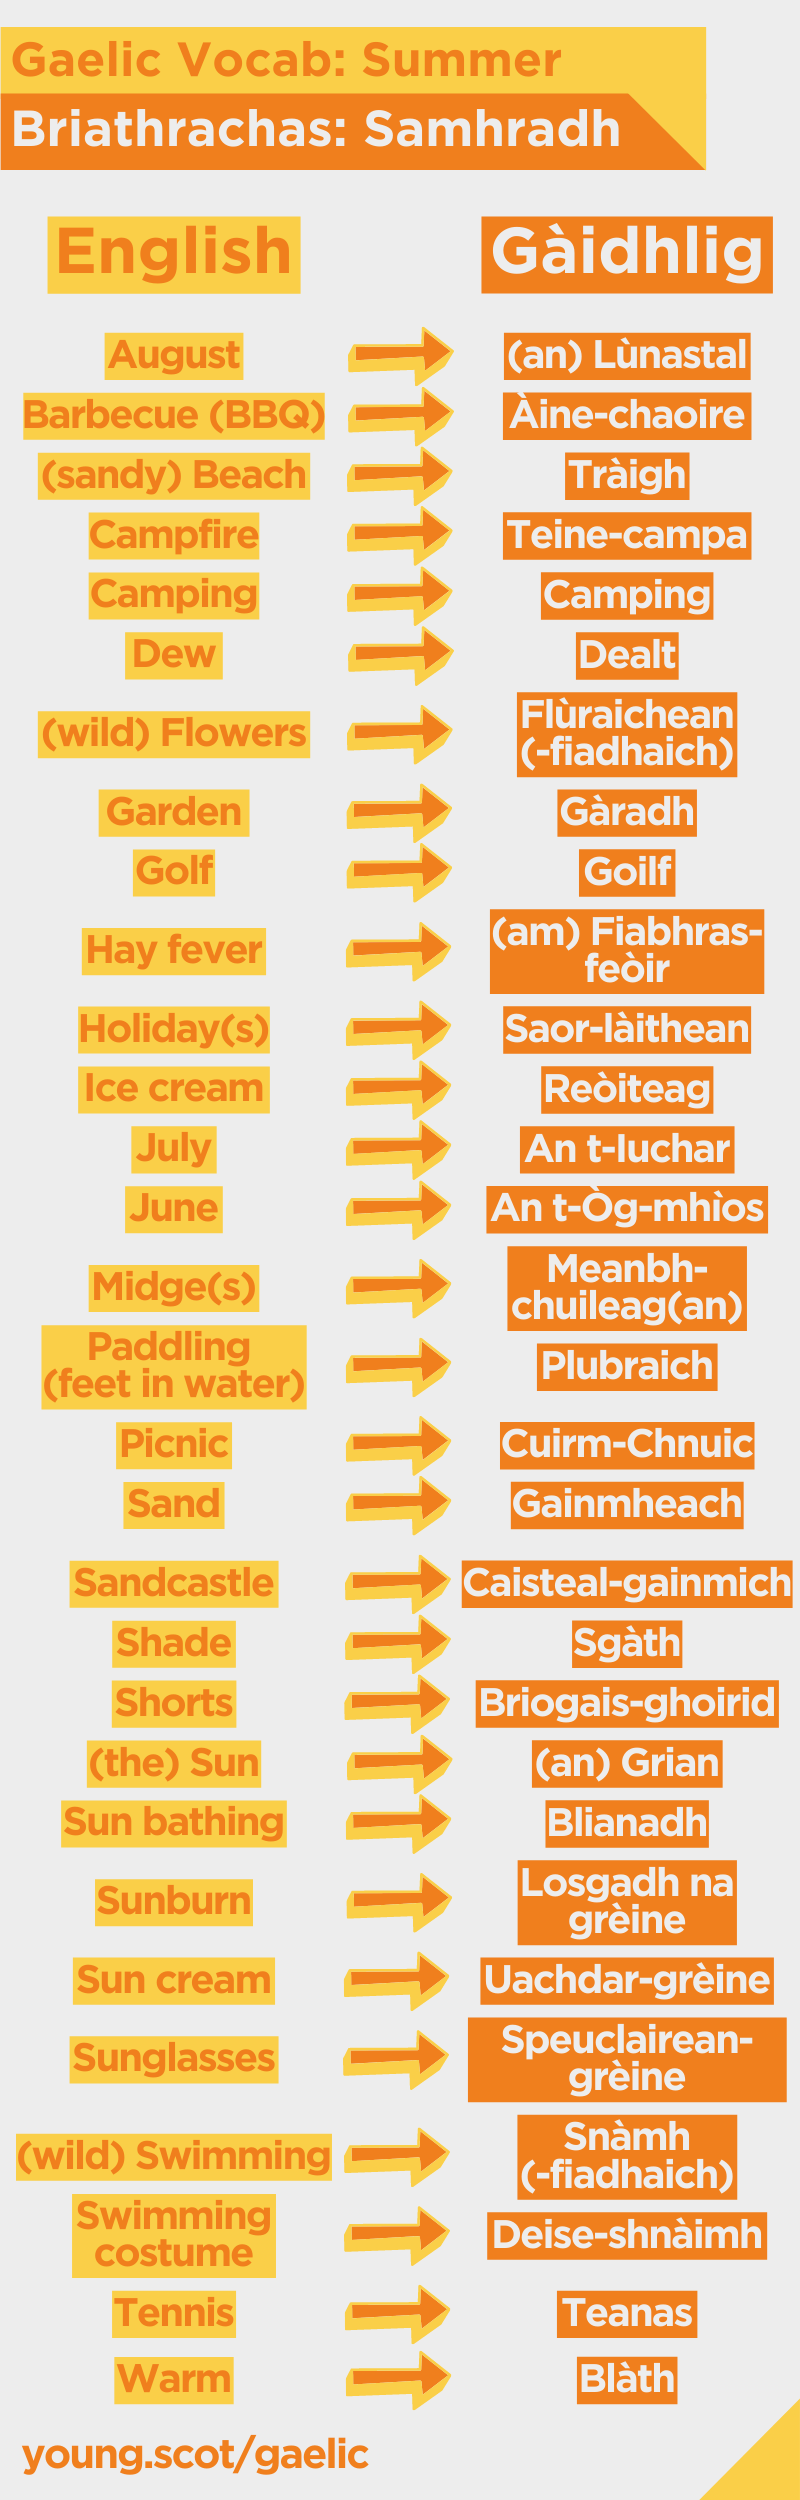 Gaelic summer words infographic - Text version below